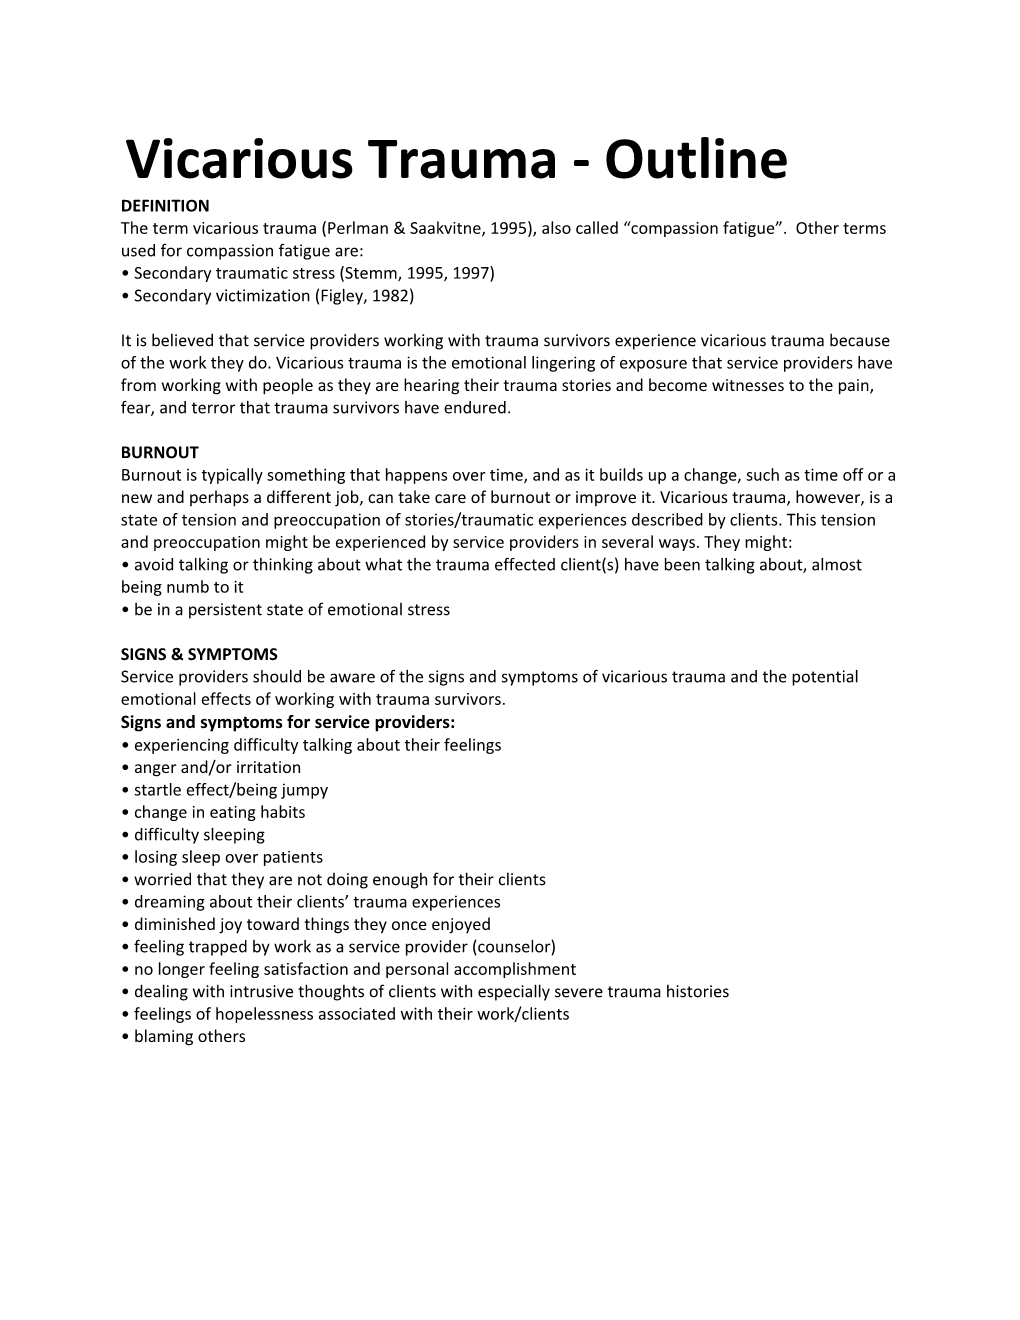 Secondary Traumatic Stress (Stemm, 1995, 1997)